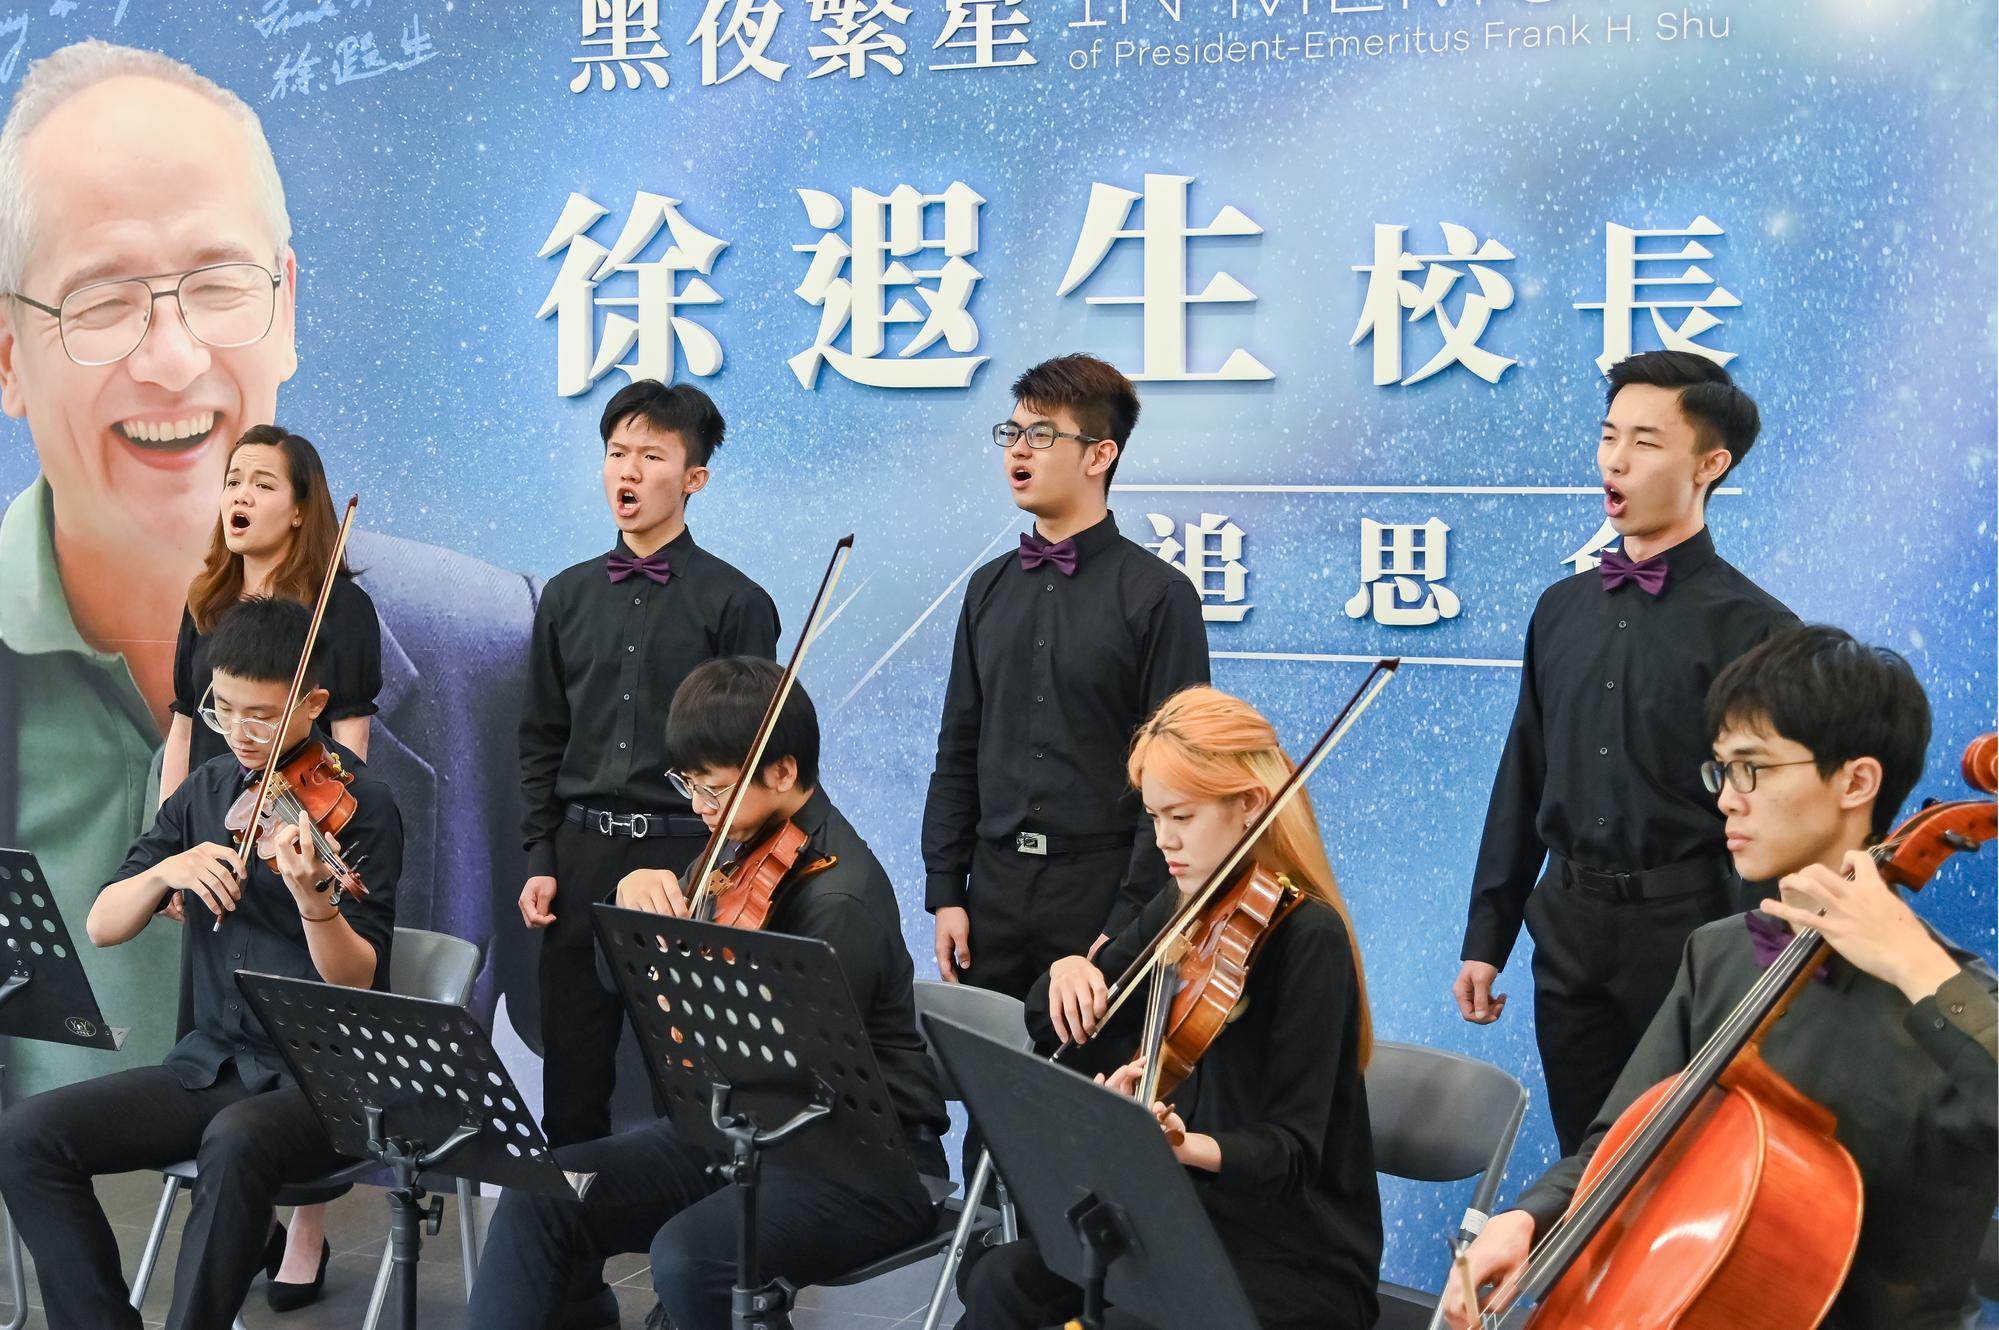 NTHU paid tribute to President-Emeritus Frank H. Shu (徐遐生) through music.